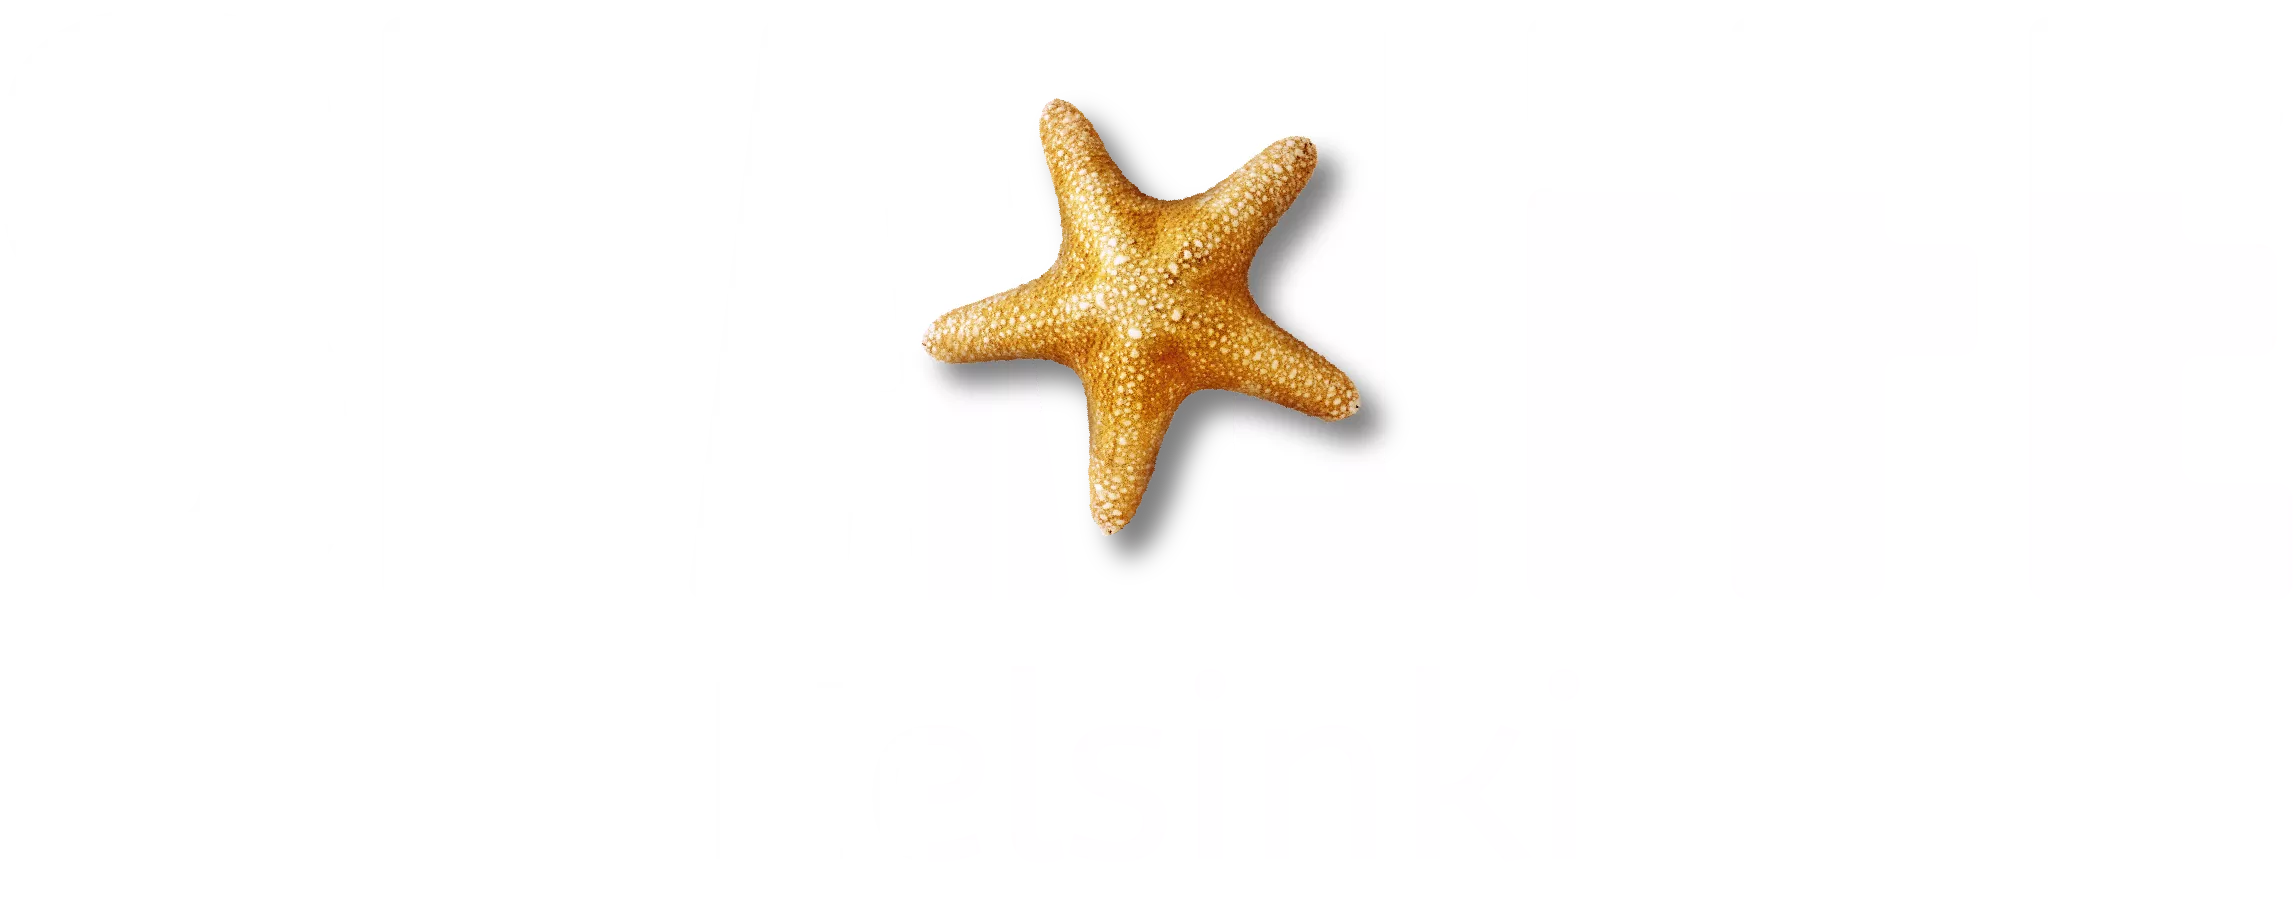 SEA LIFE + Helsinki (White Text) RGB